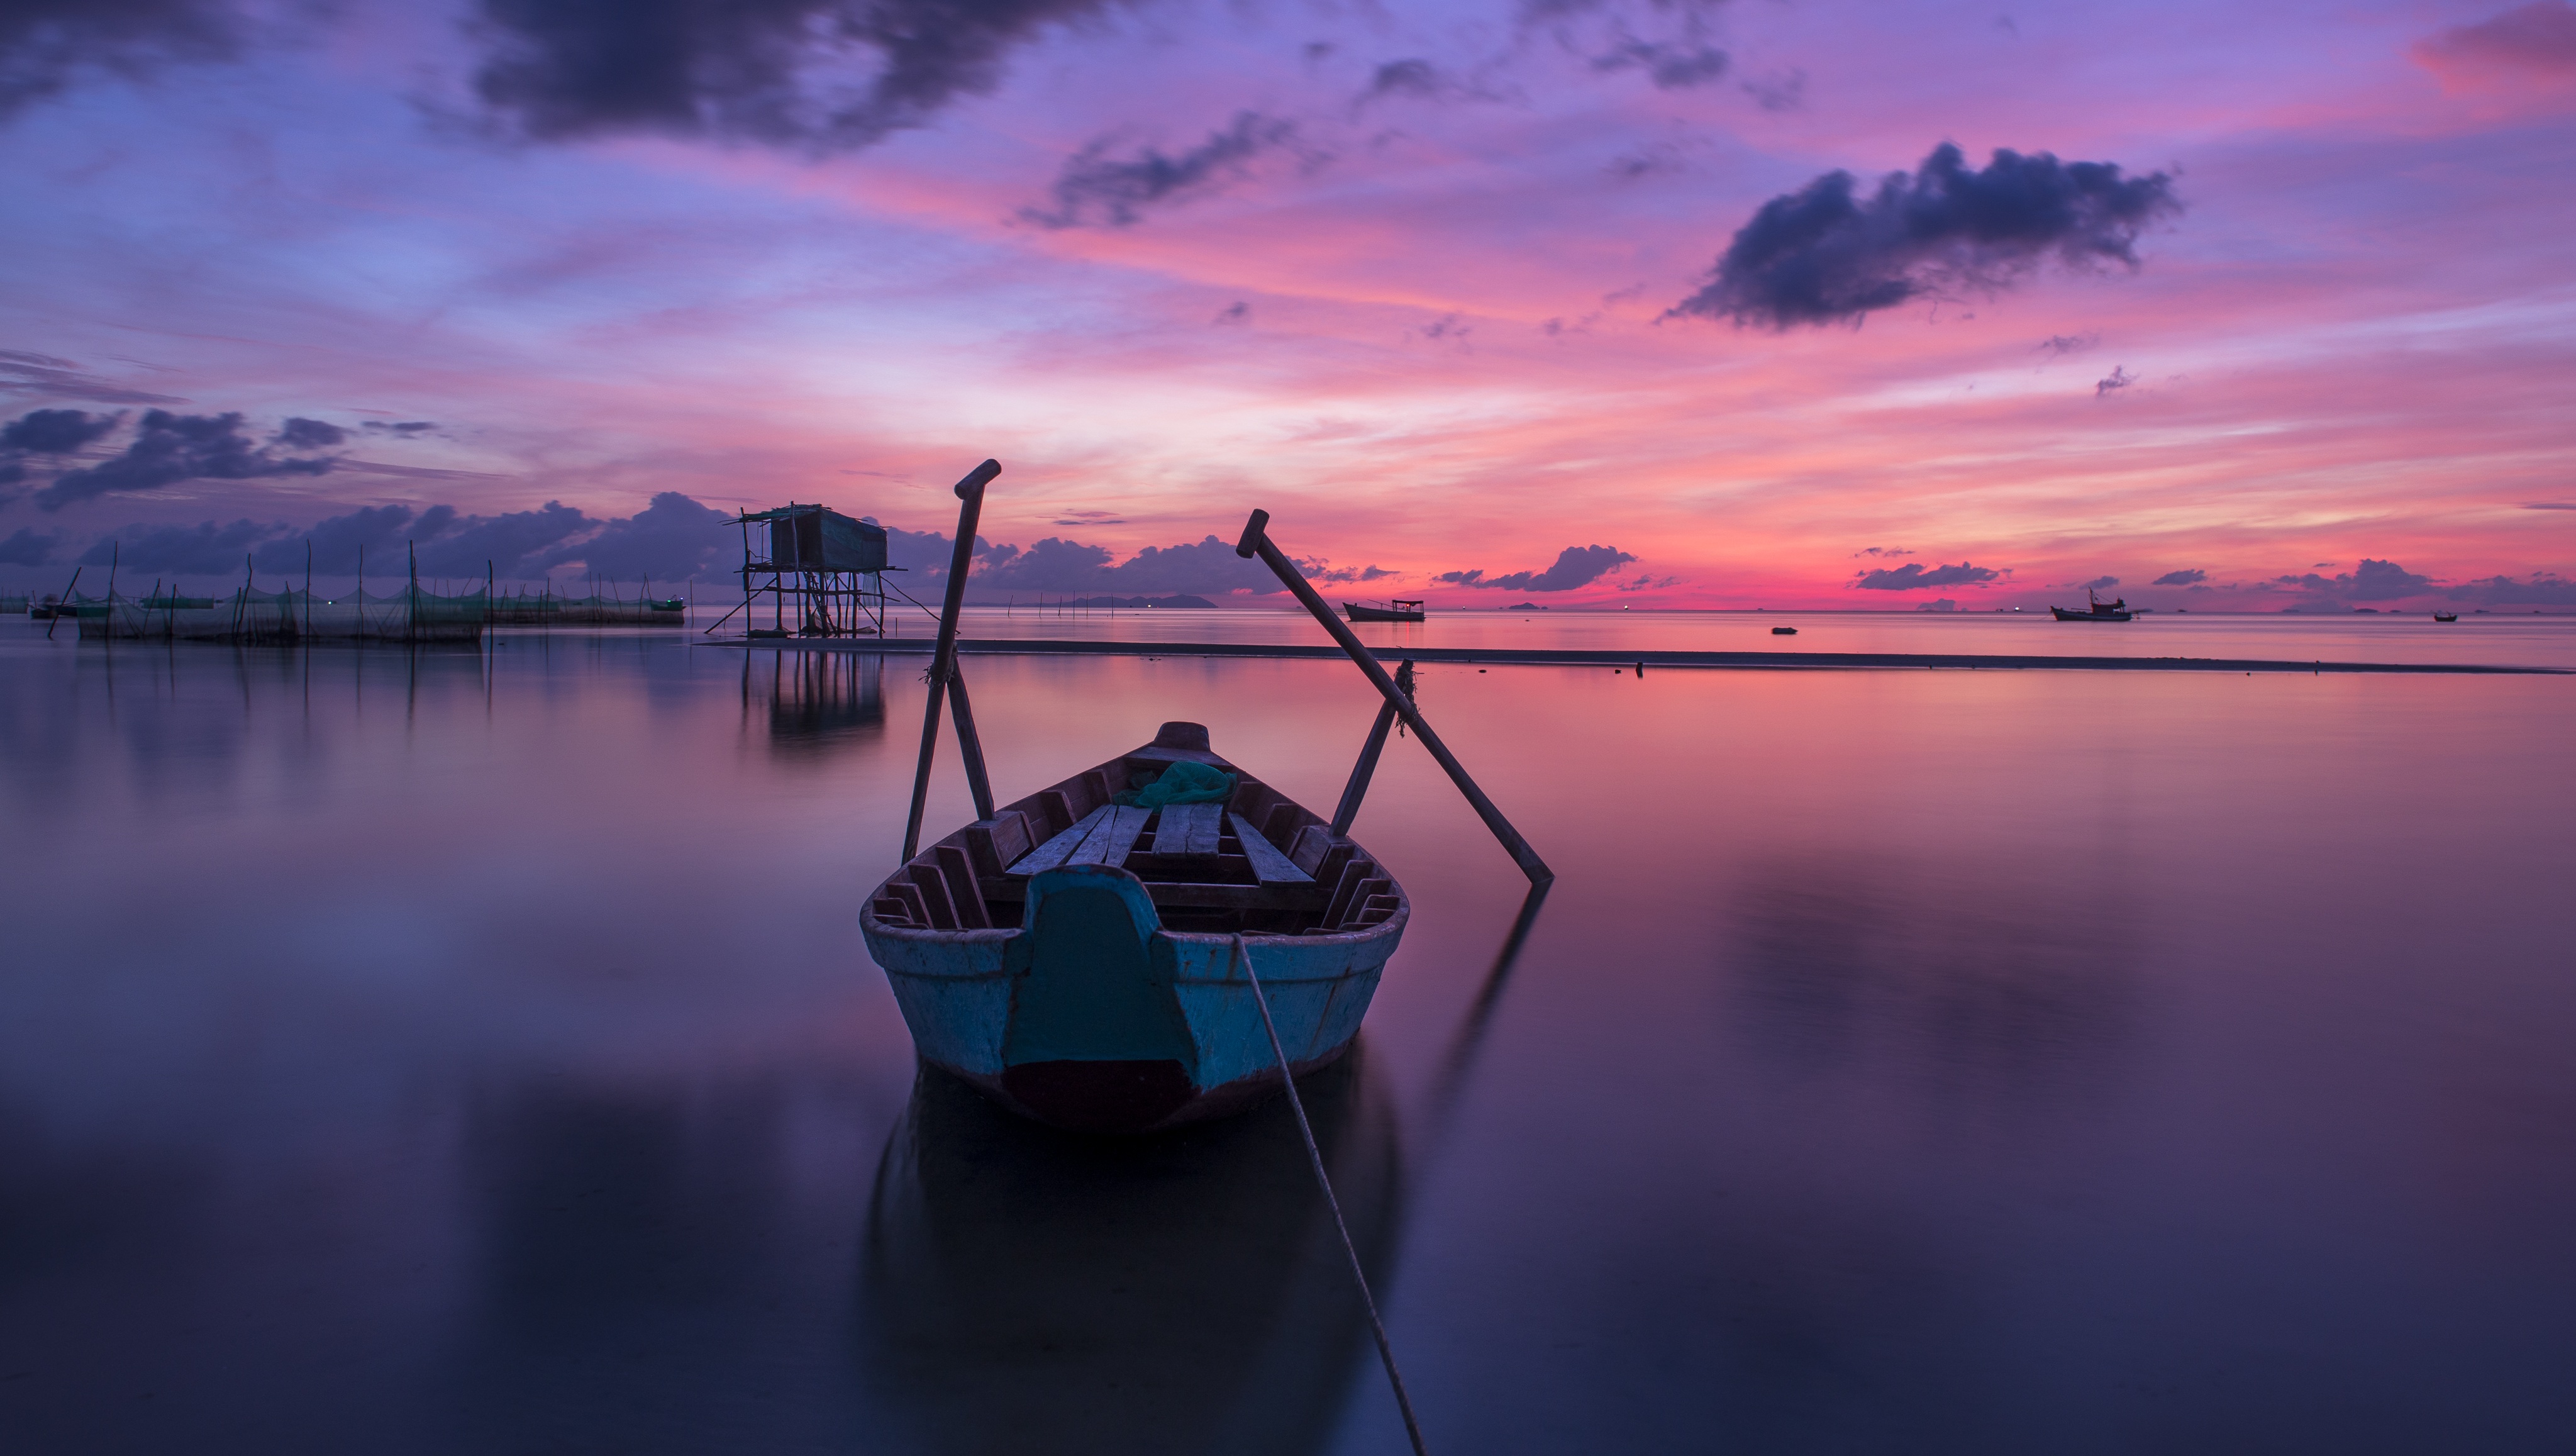 132730 descargar imagen naturaleza, amanecer, horizonte, un barco, bote, vietnam: fondos de pantalla y protectores de pantalla gratis